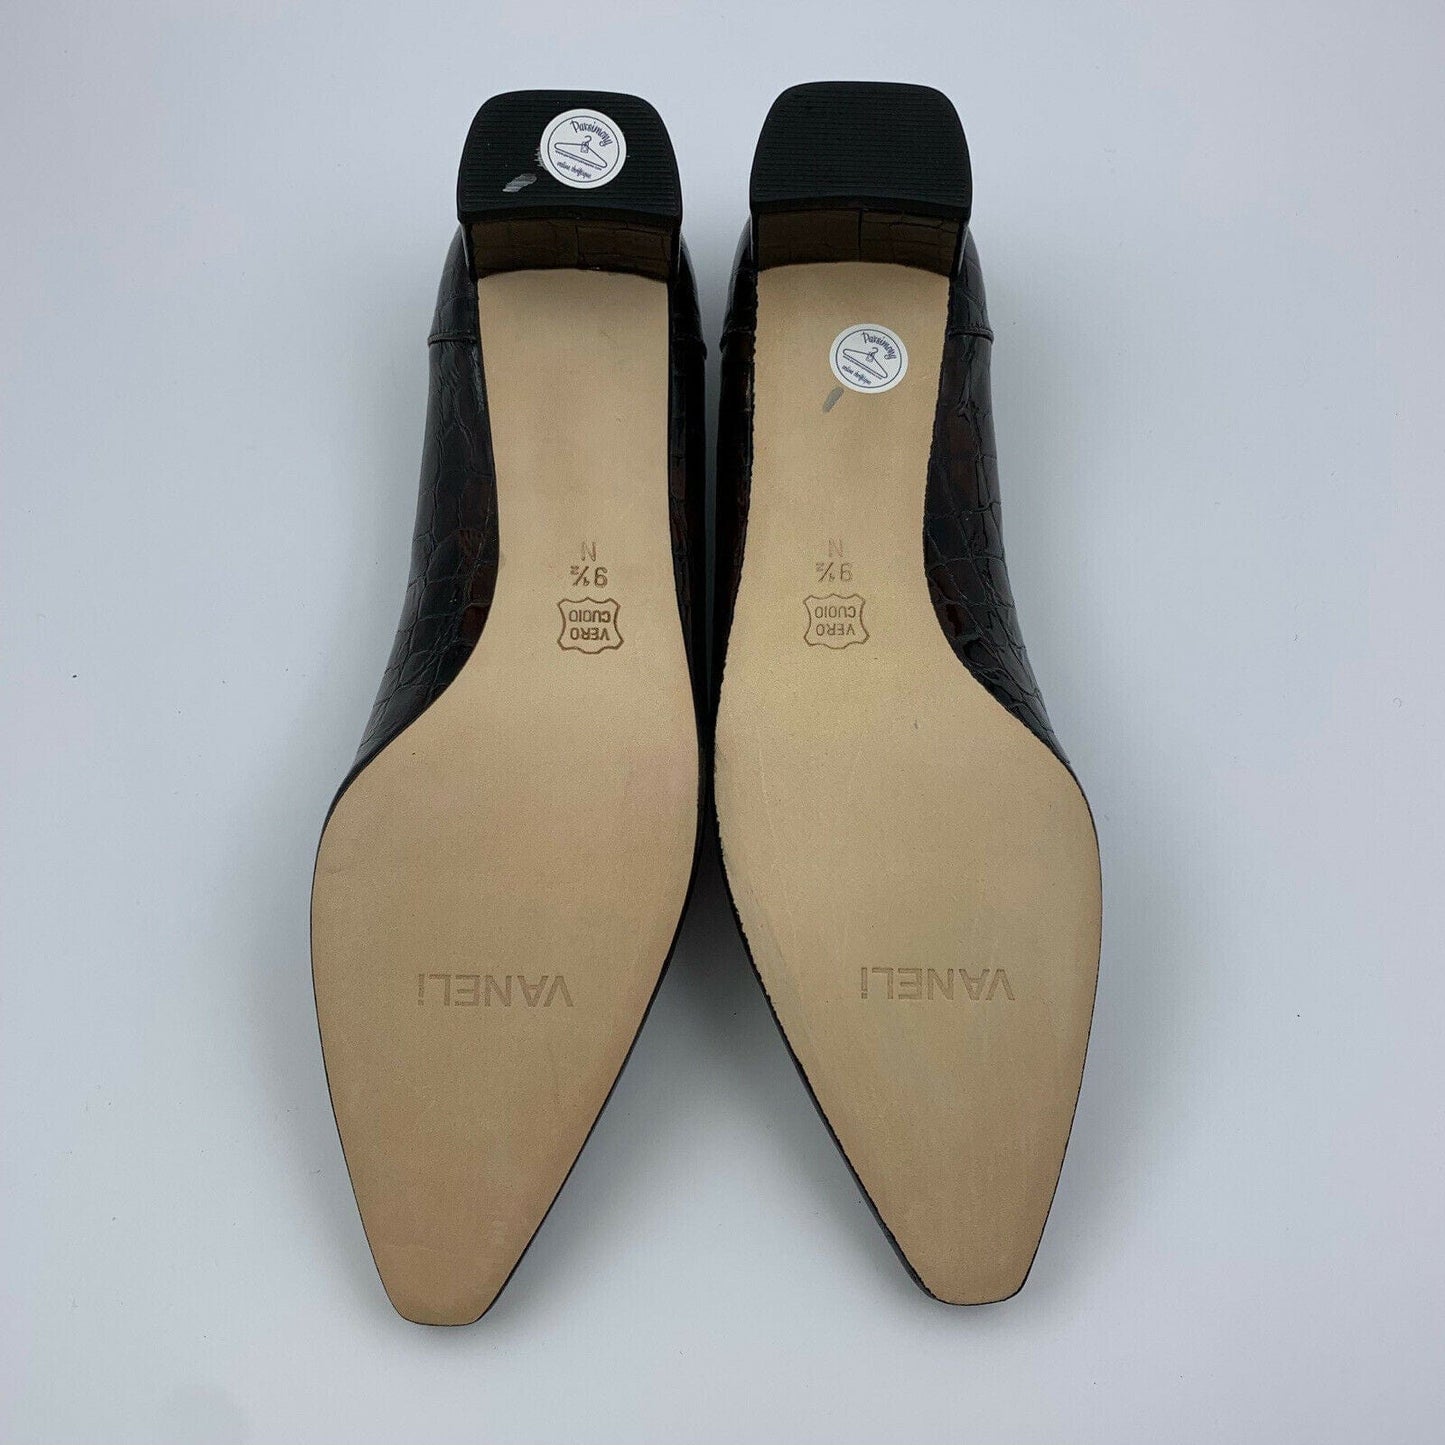 VANELi Womens Patent Leather “Helyet” Tmoro Heels Pumps, Brown - Size 9.5B $150 - parsimonyshoppes